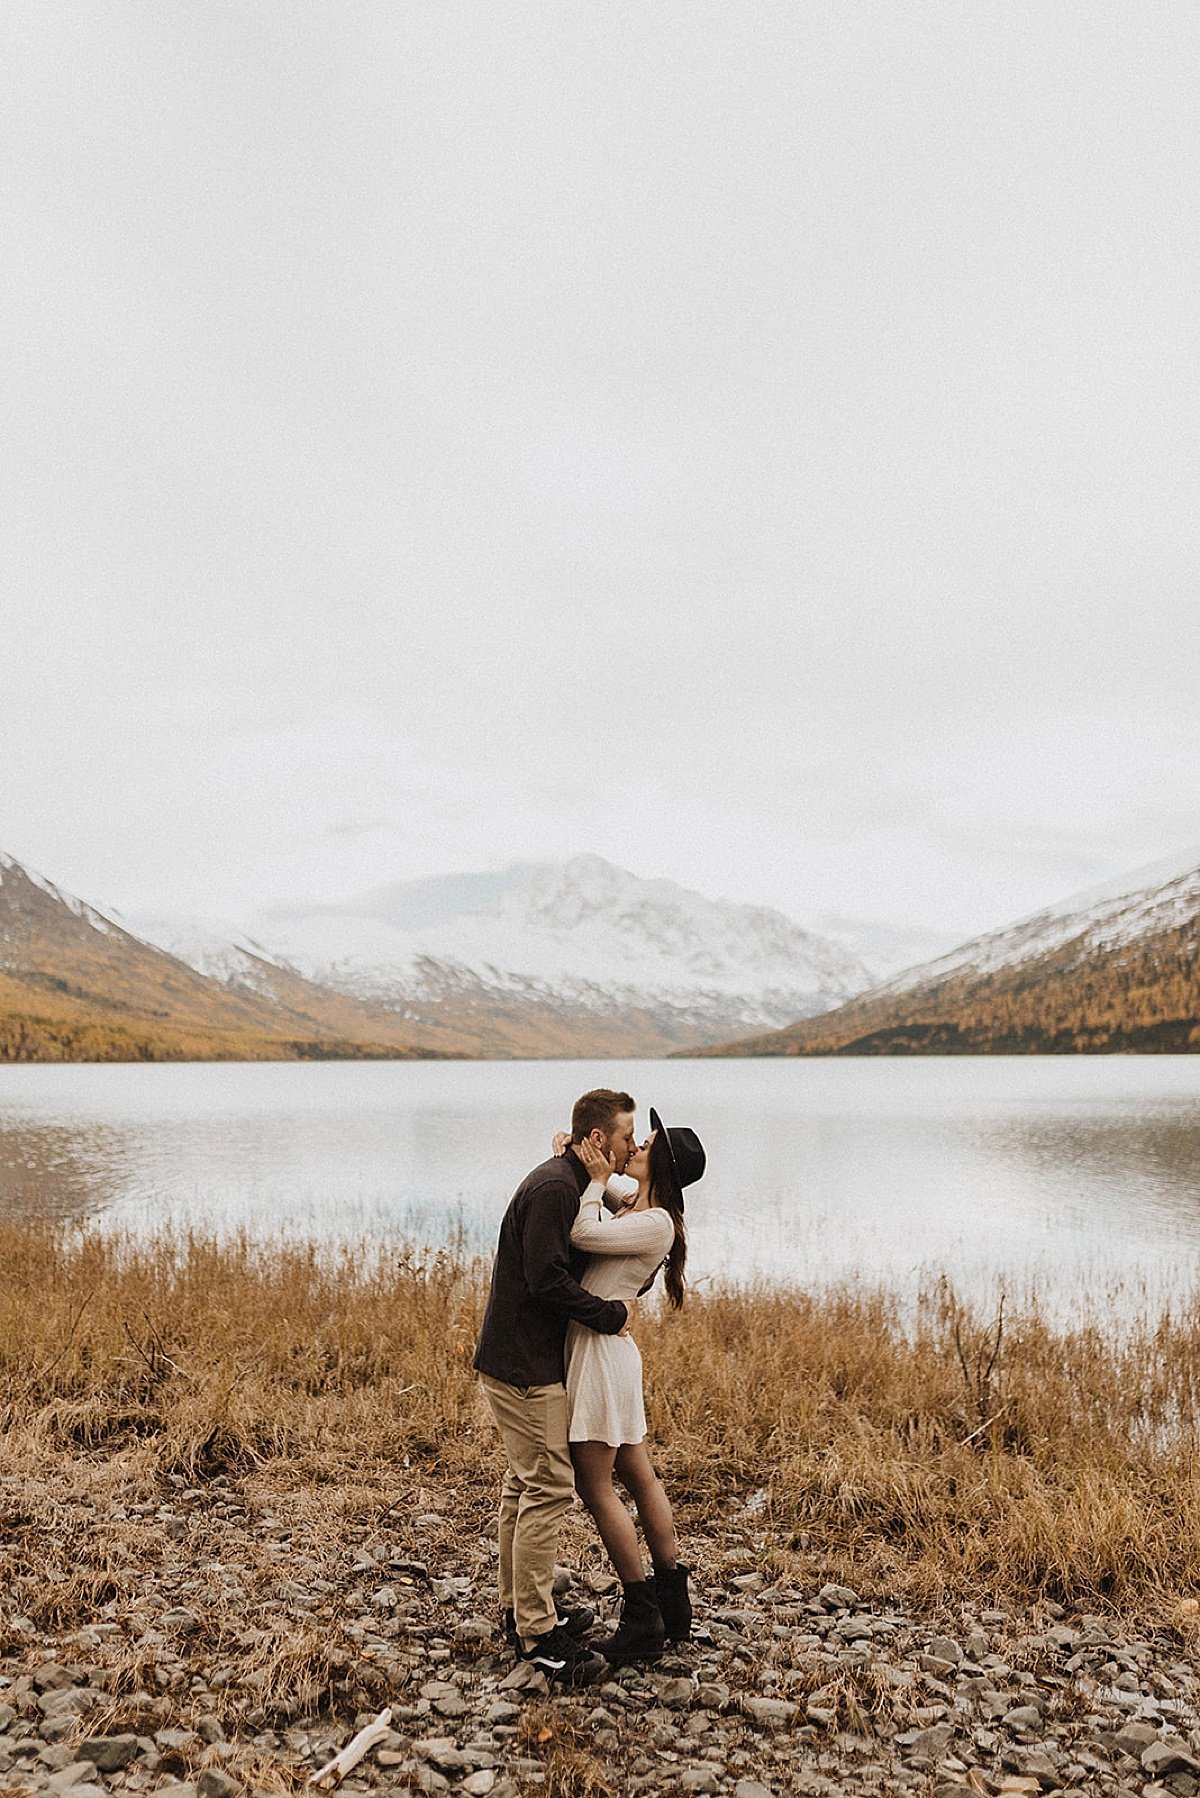  Engaged couple kiss at alaska mountain lake during autumn engagement shoot 